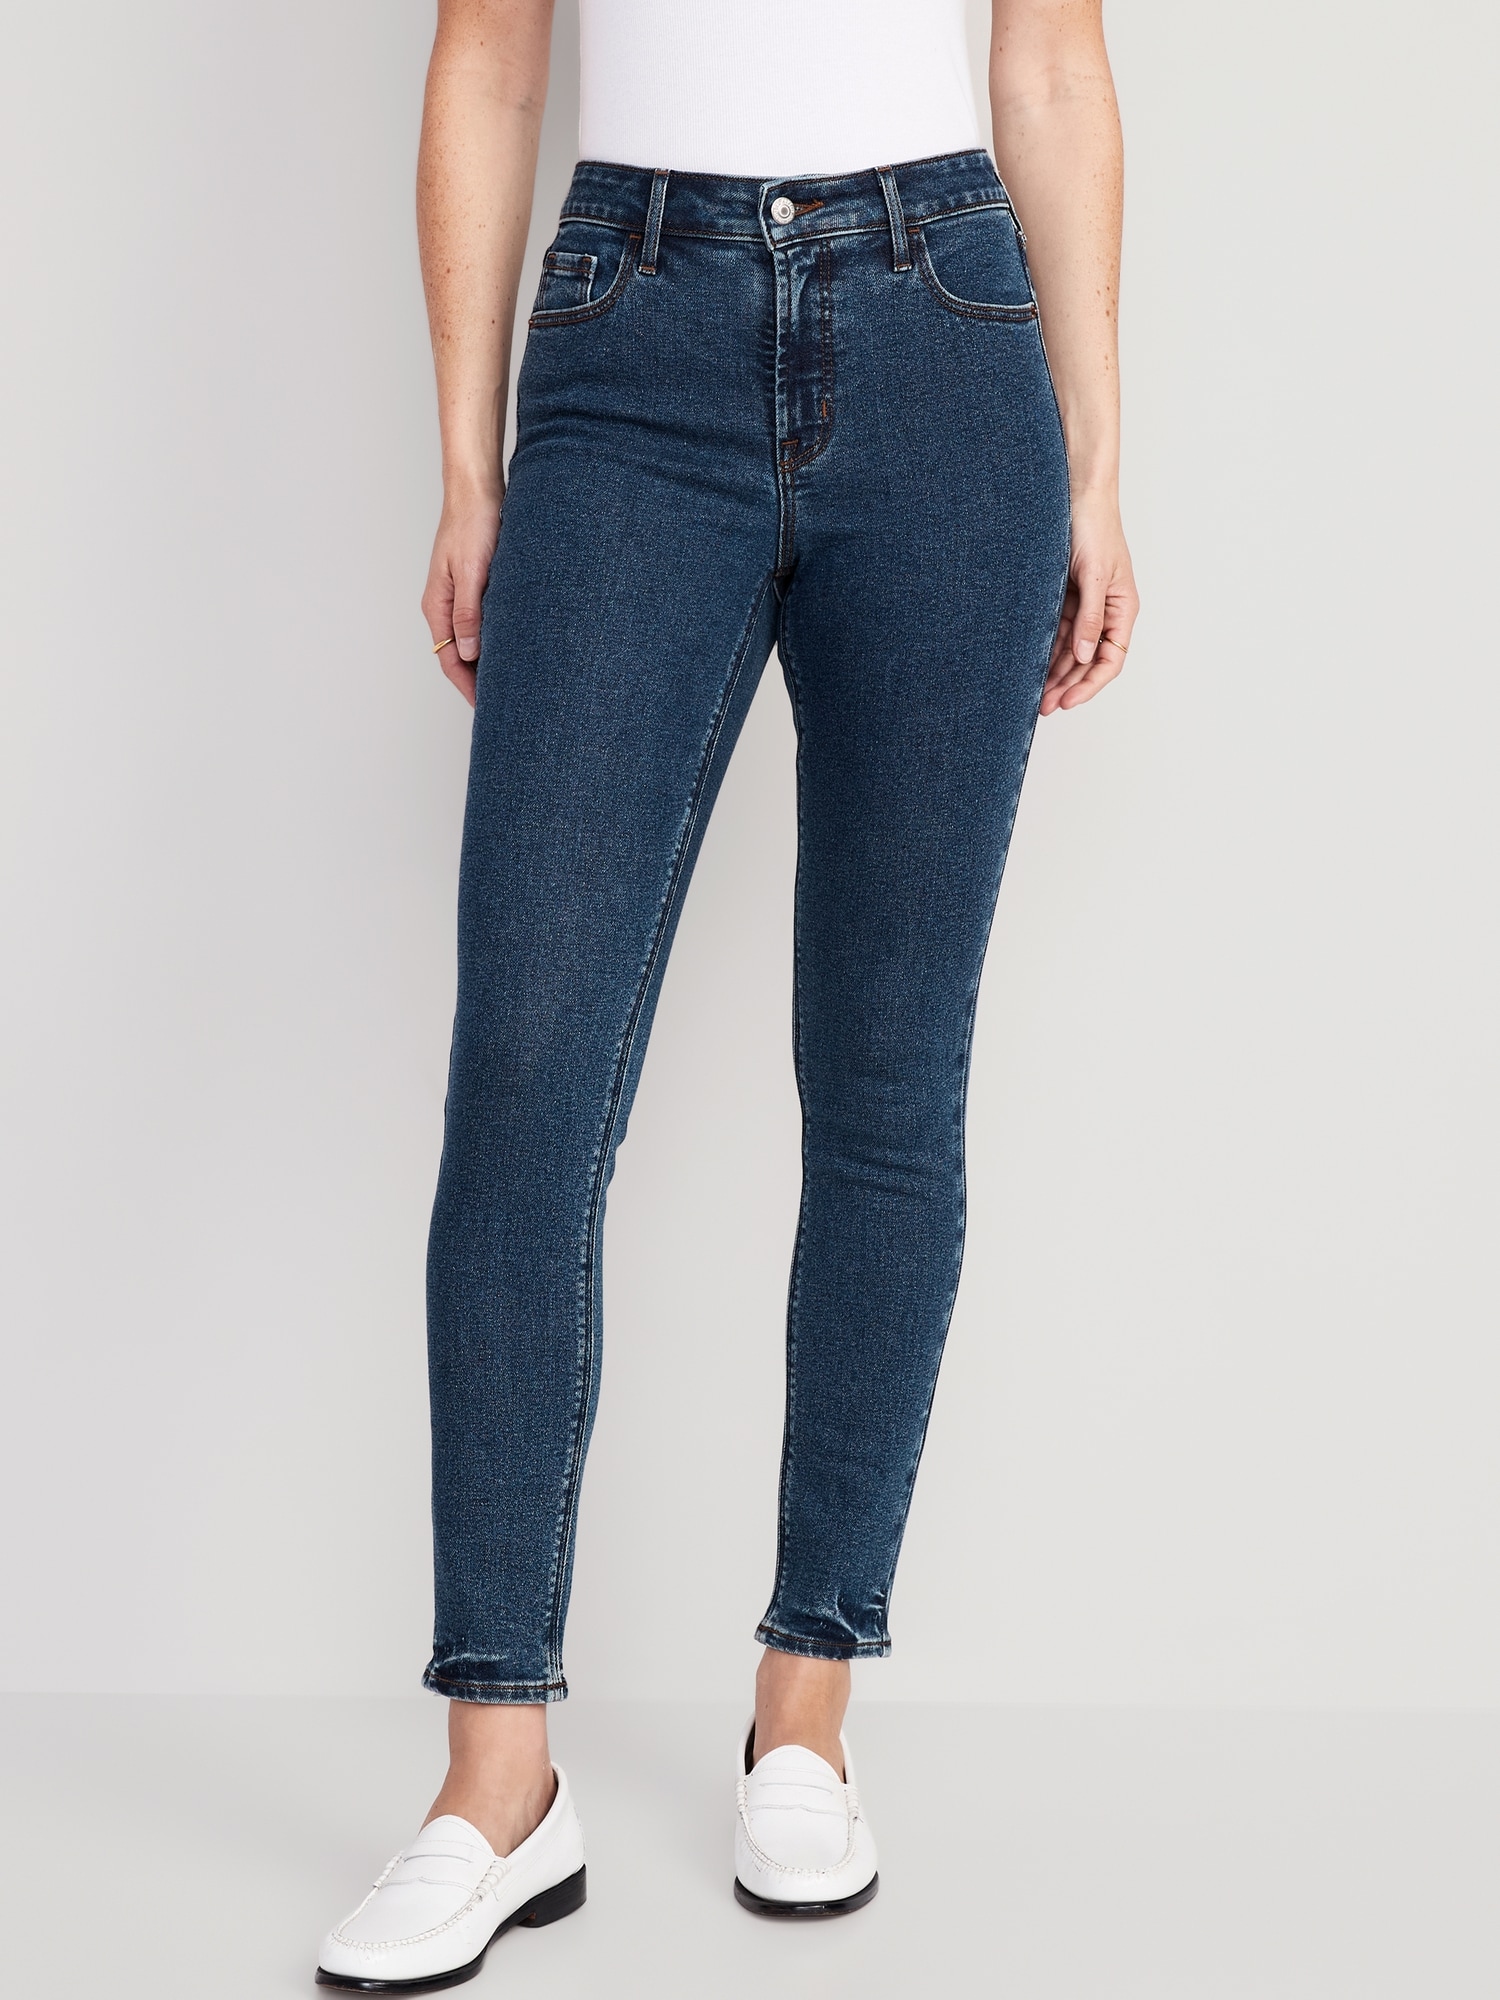 Oldnavy High-Waisted Rockstar Super-Skinny Jeans for Women